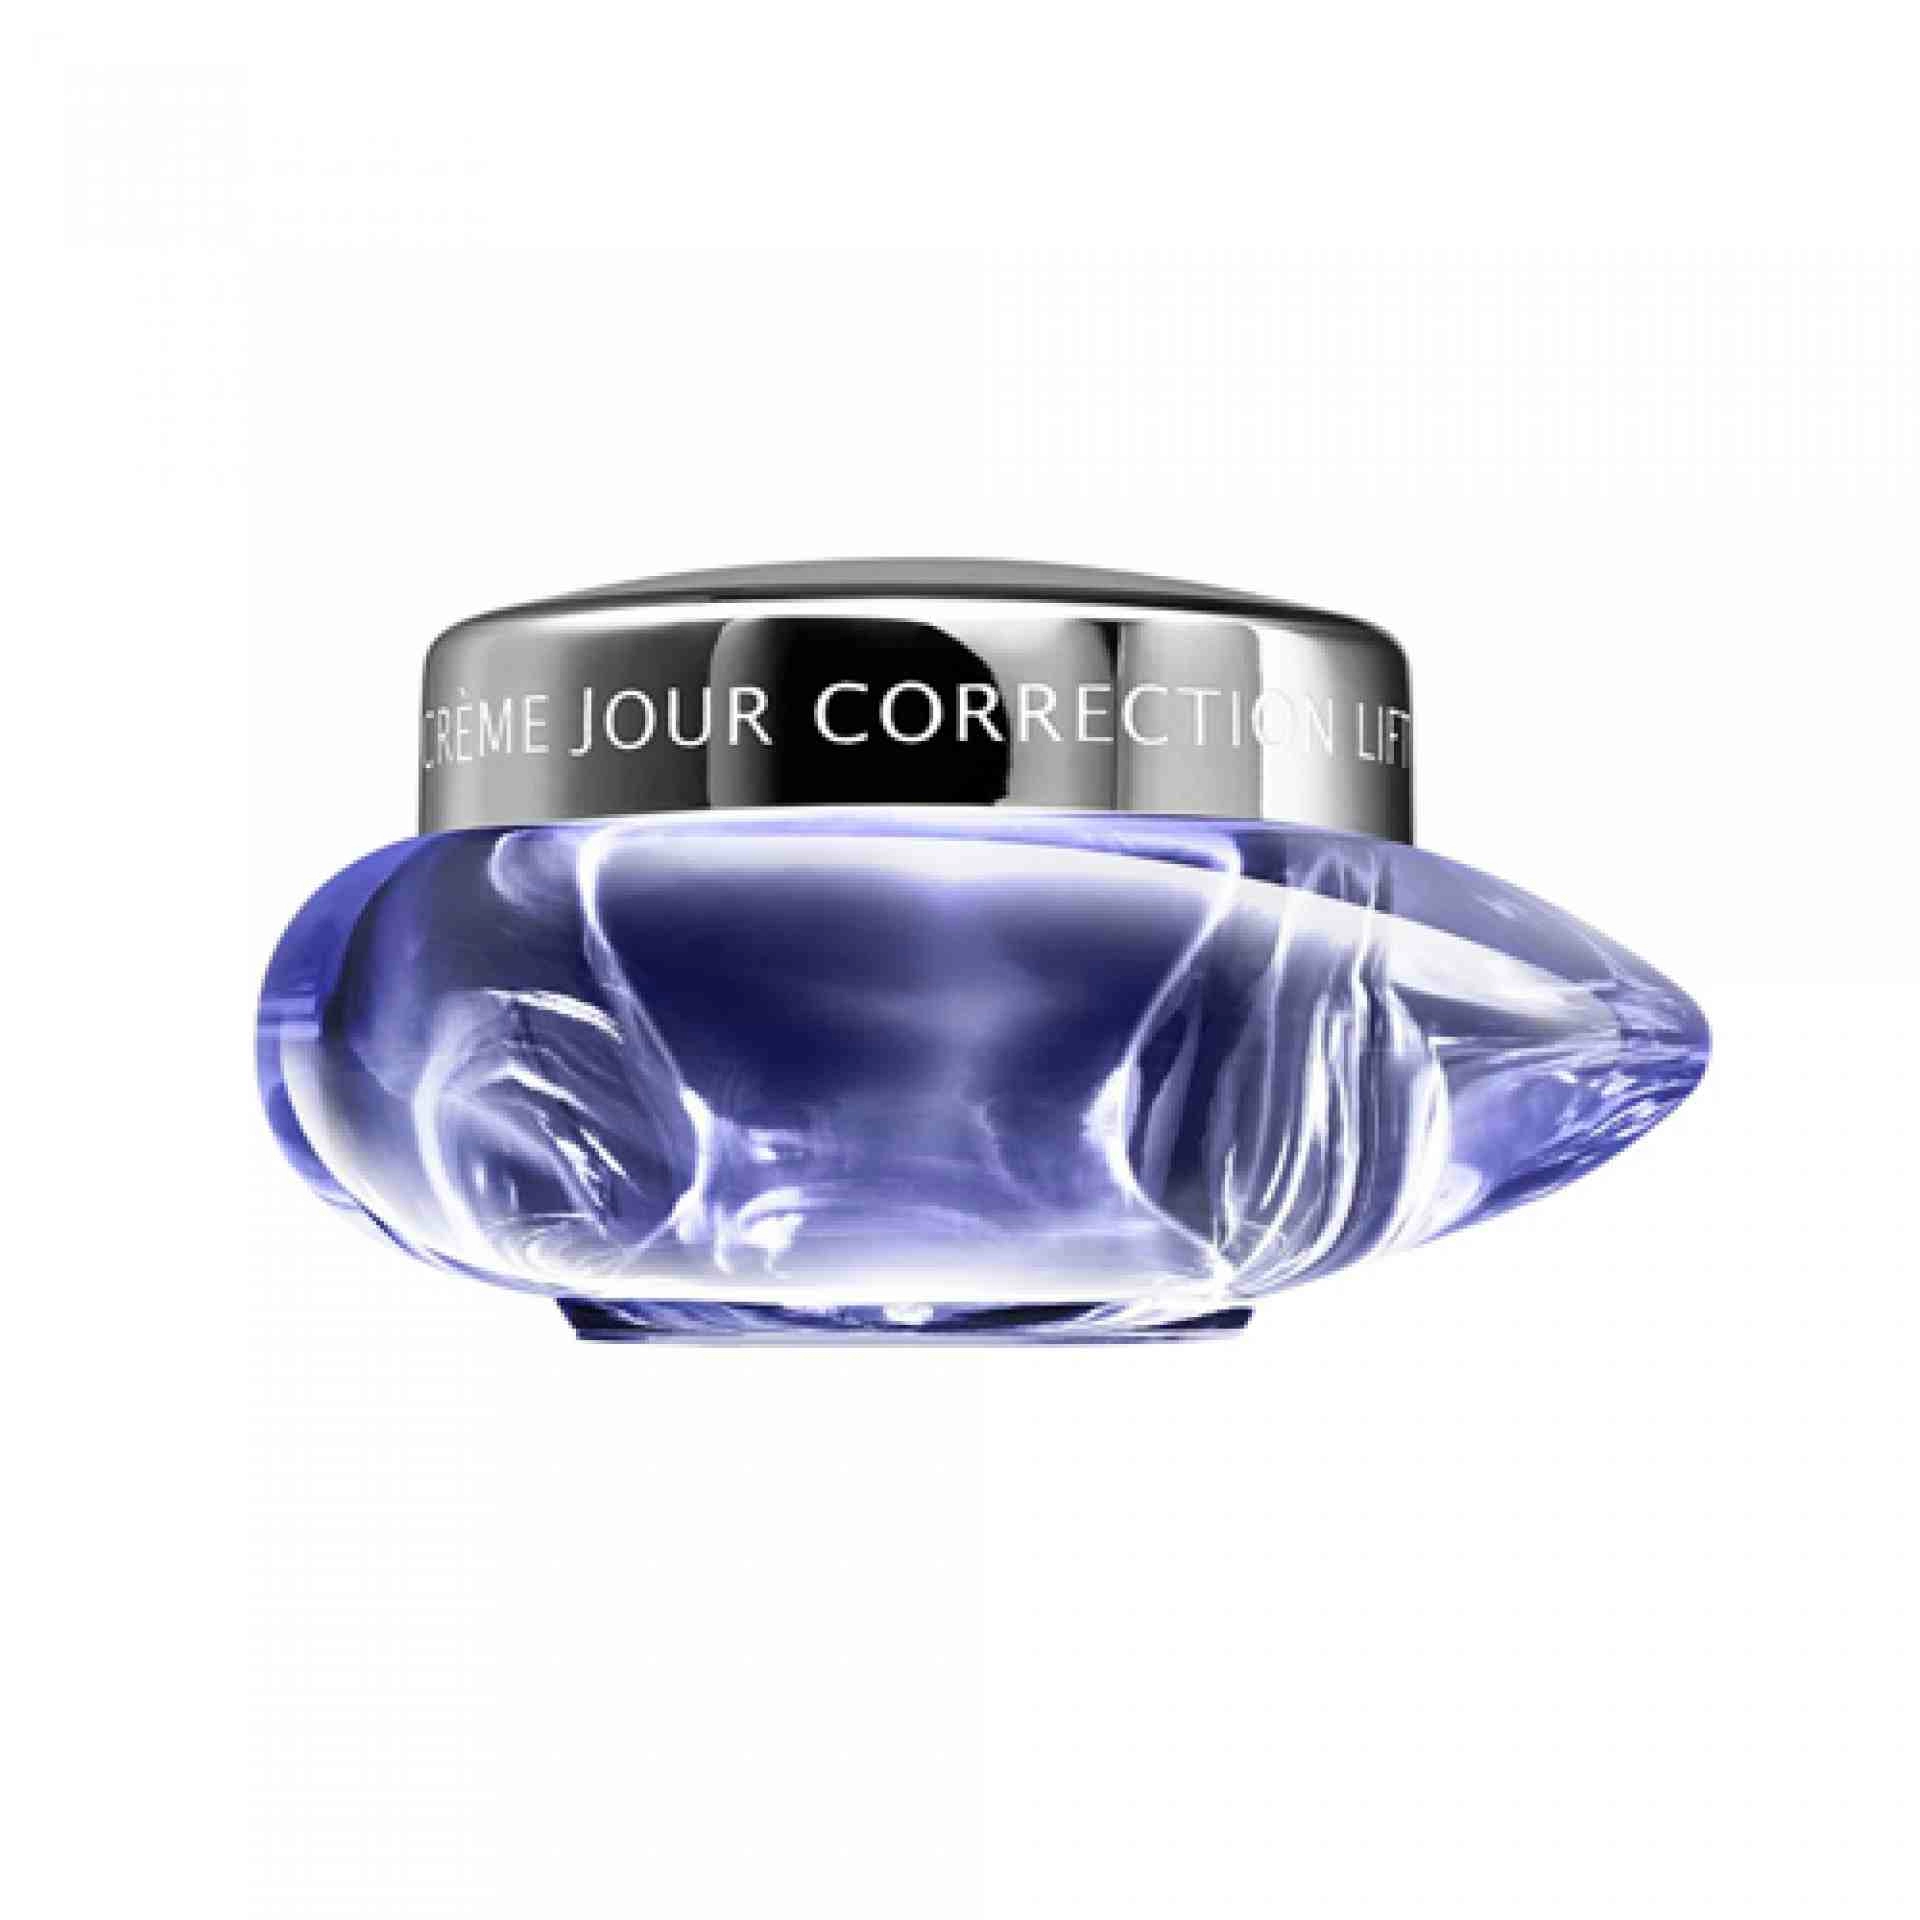 Crème Jour Correction Lift | Crema Reafirmante 50ml - Silicium Marin - Thalgo ®